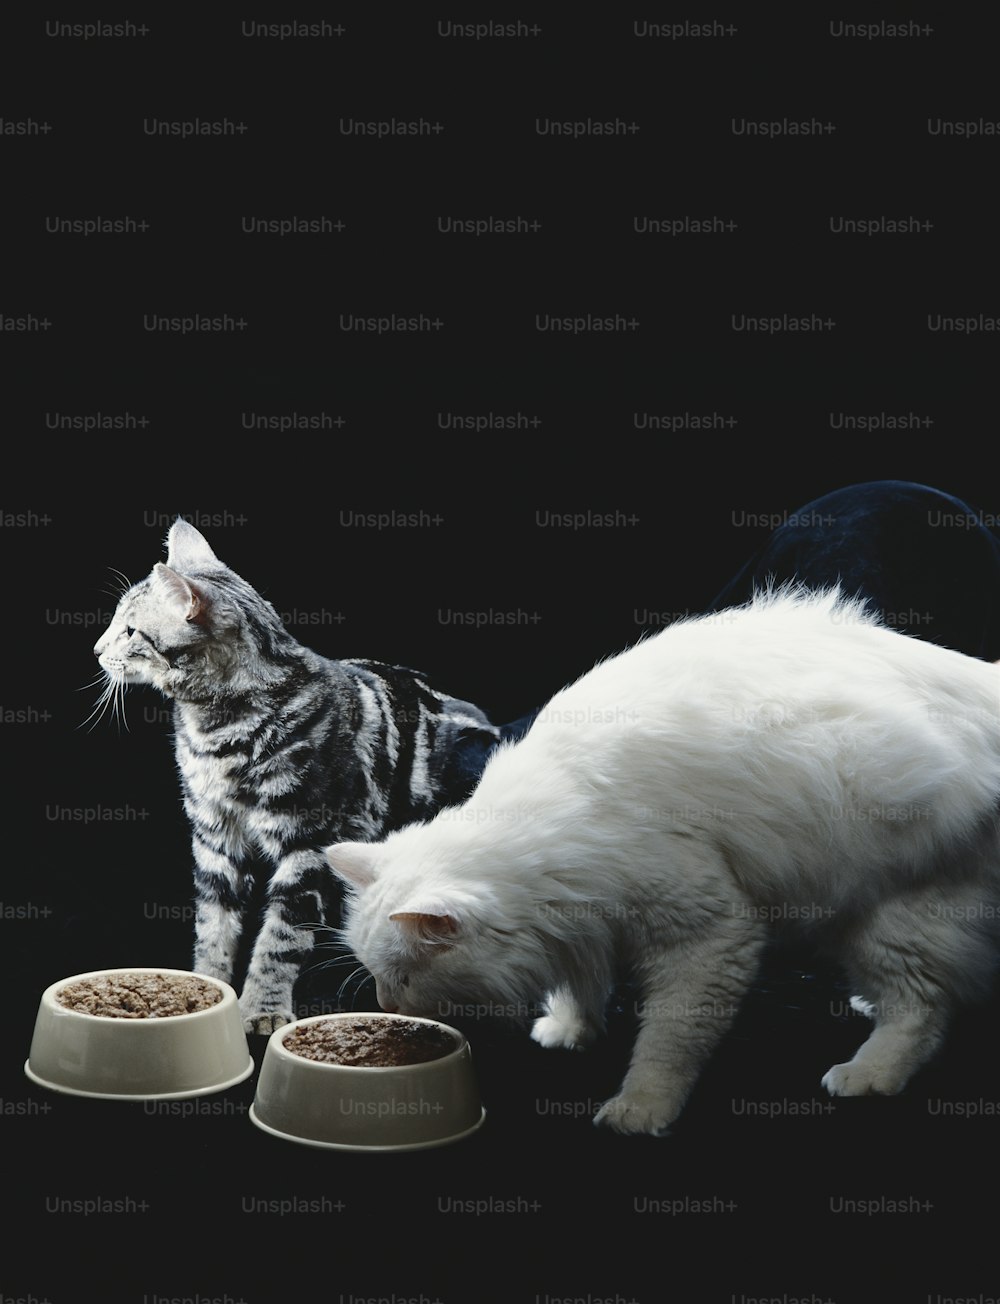 Un gato comiendo de un tazón junto a otro gato